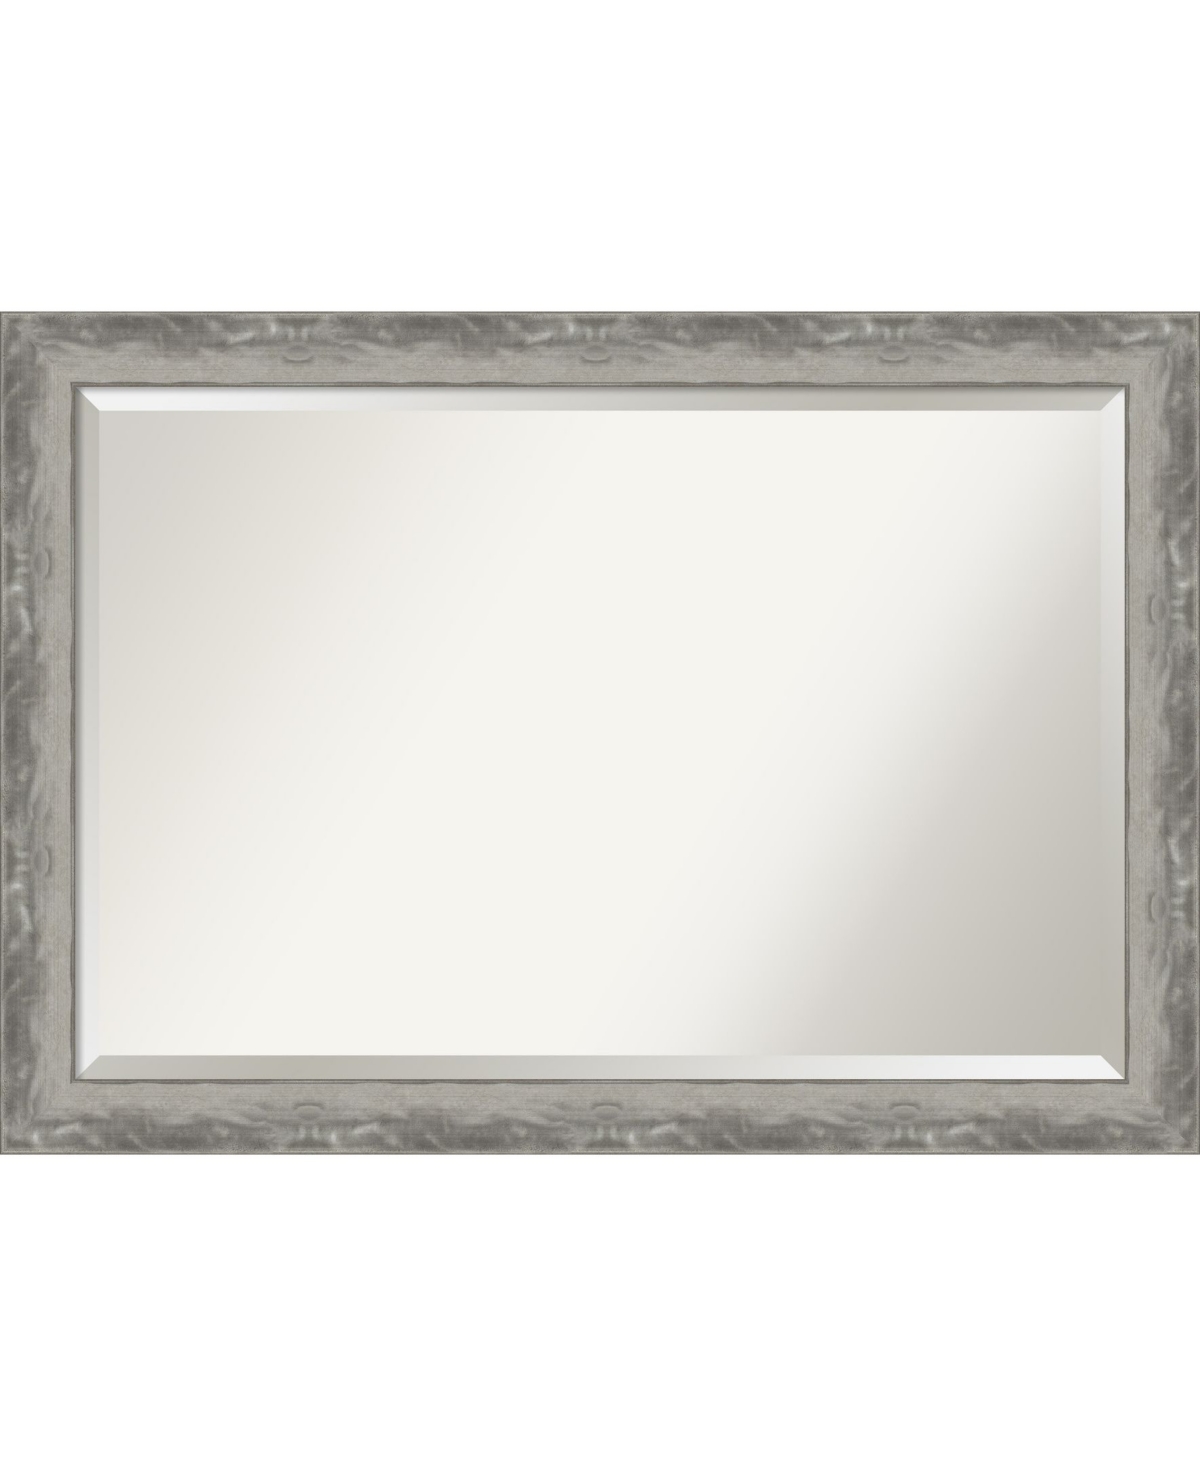 Waveline Silver-tone Framed Bathroom Vanity Wall Mirror, 40.38" x 28.38" - Silver